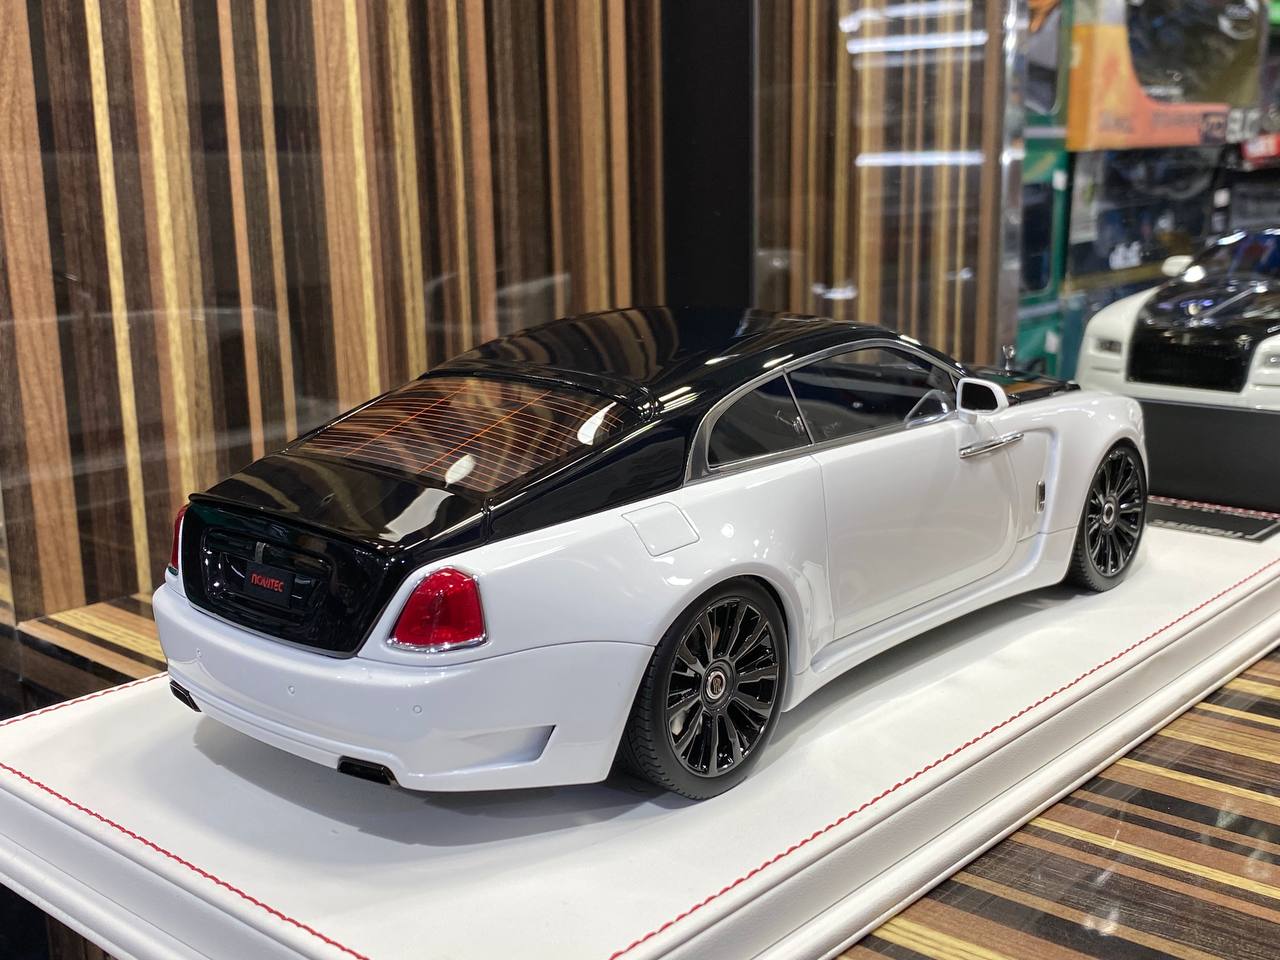 1/18 Resin Model - Davis & Giovanni Rolls-Royce WRAITH NOVITEC Limited Edition (50pcs), White/Metallic Black|Sold in Dturman.com Dubai UAE.